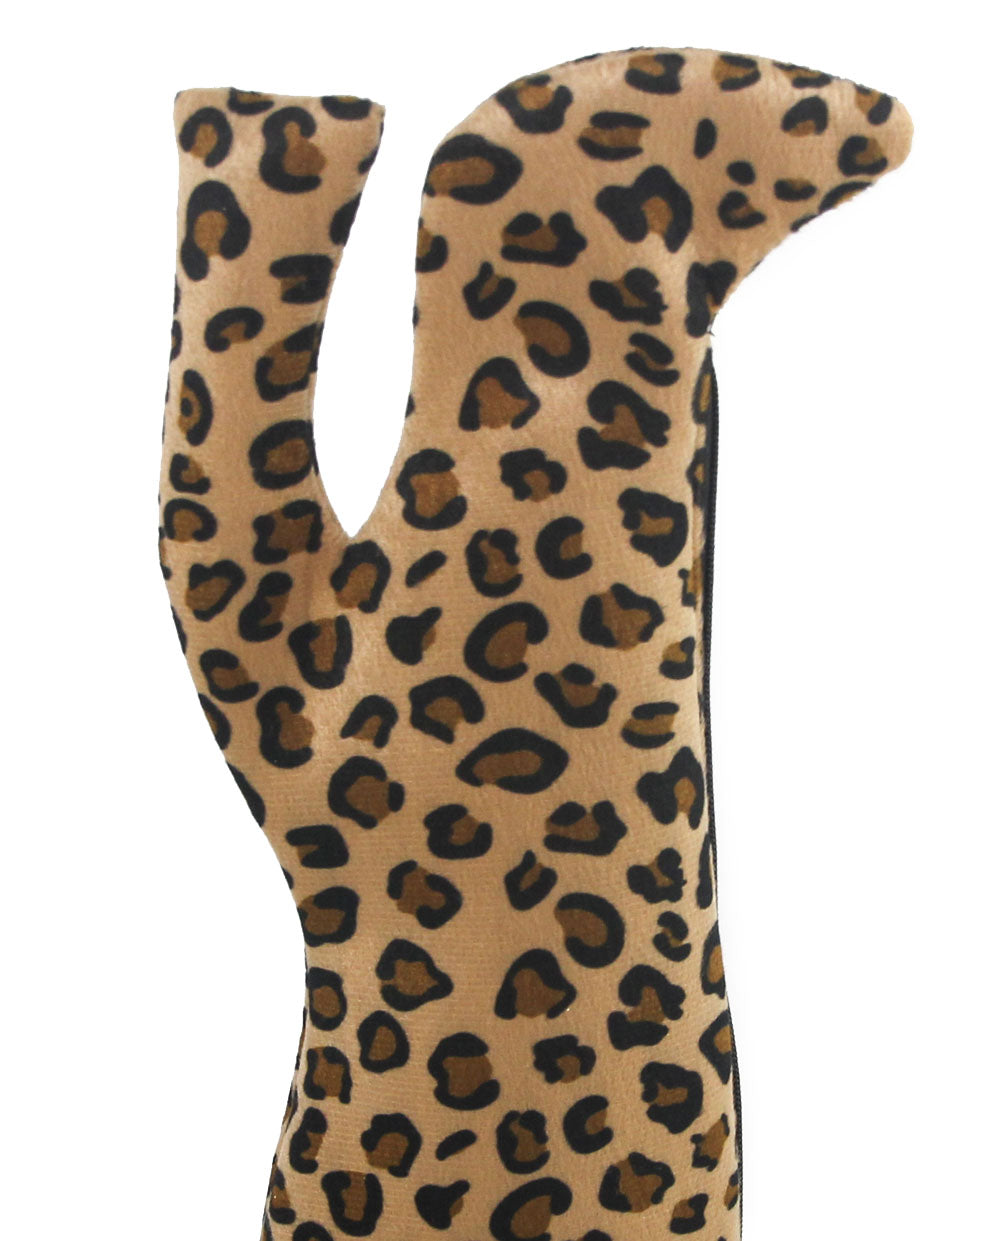 Stiletto Wine Bag in Cheetah Print